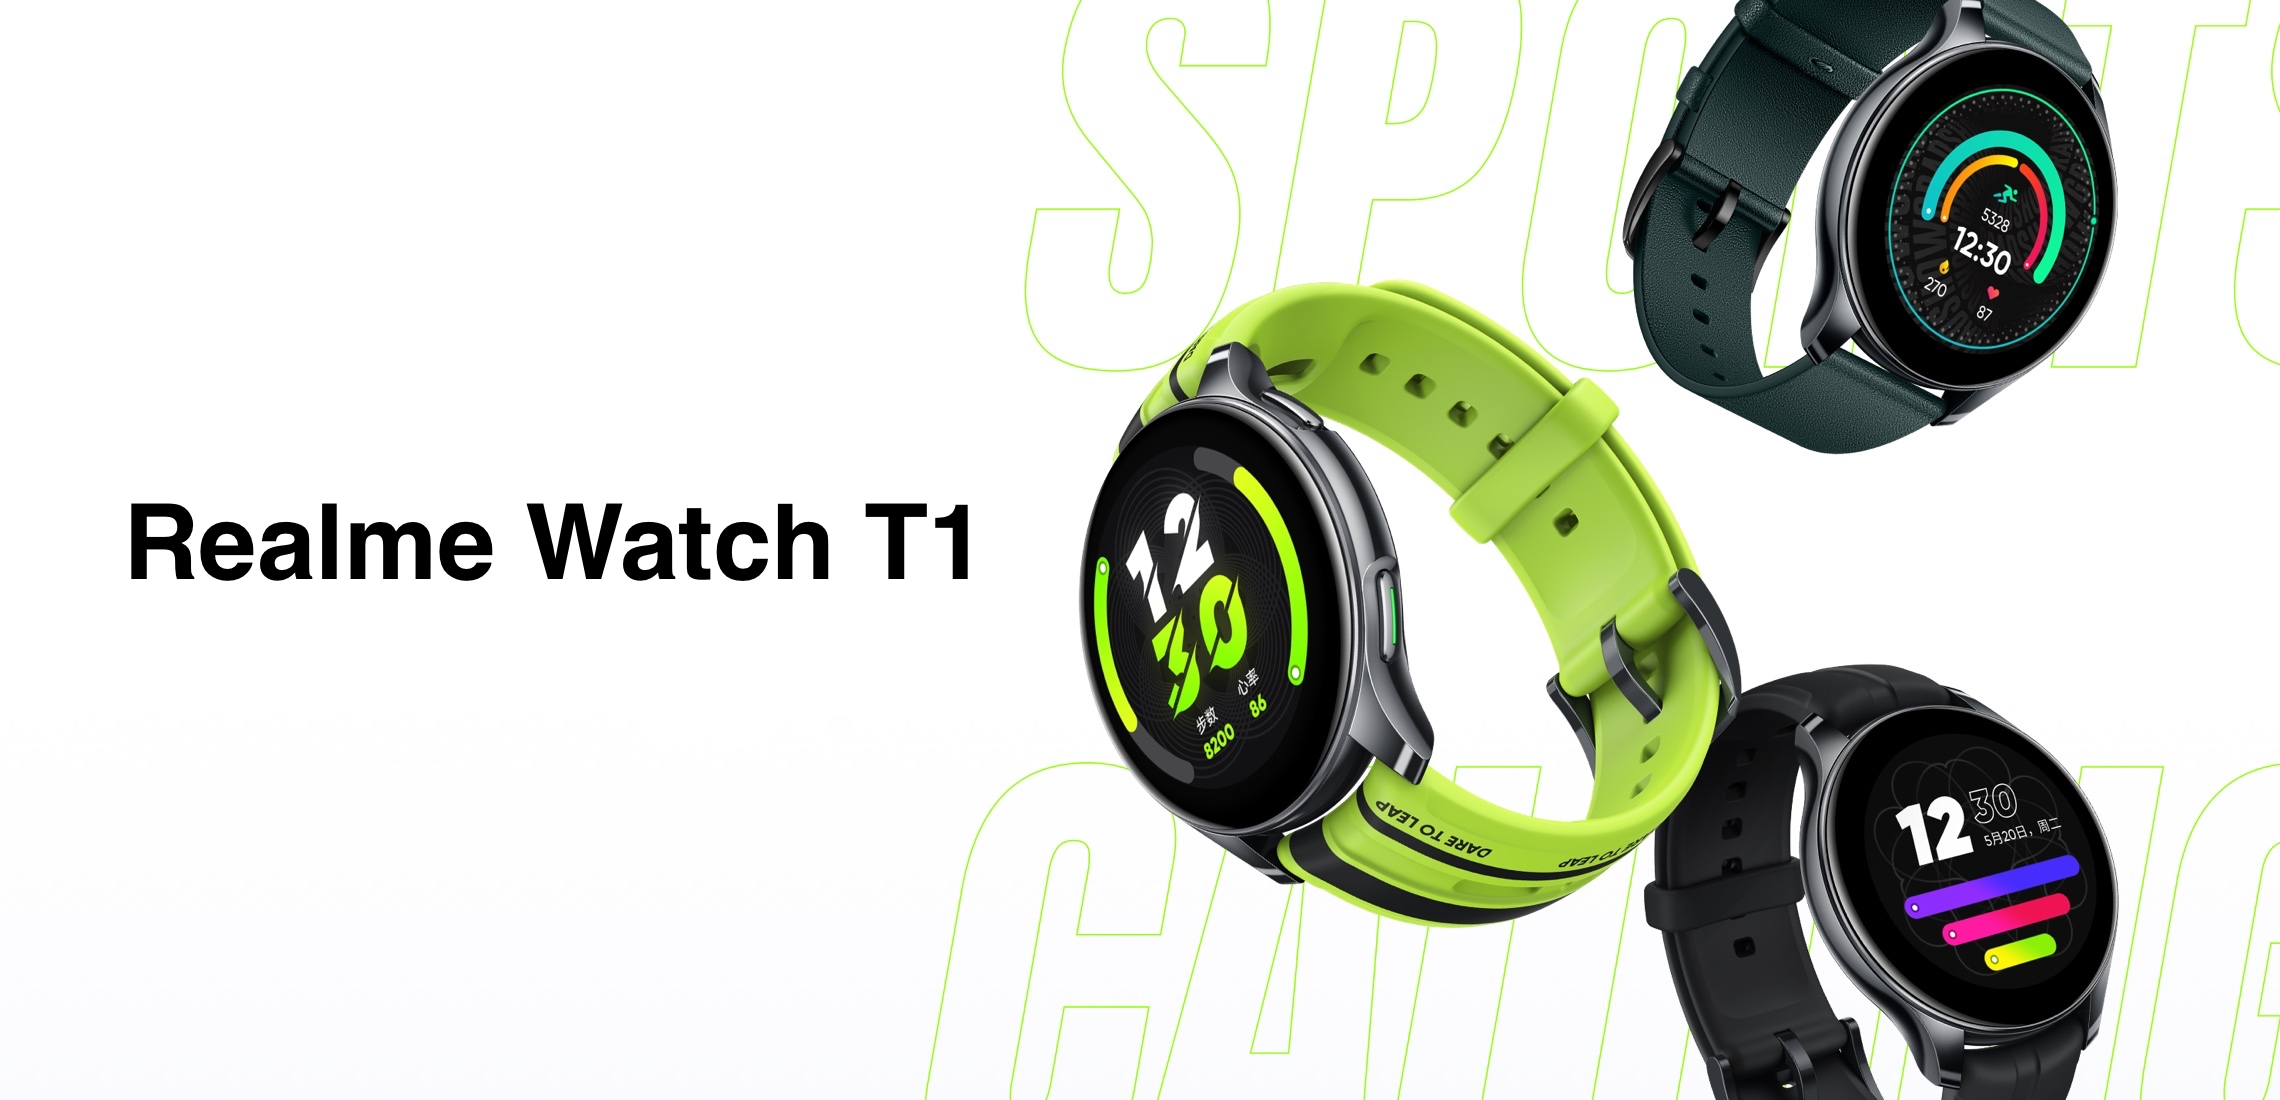 Realme Watch T1: Rundes AMOLED-Display, SpO2-Sensor, 110 Sportmodi, NFC und bis zu 7 Tage Akkulaufzeit für $110